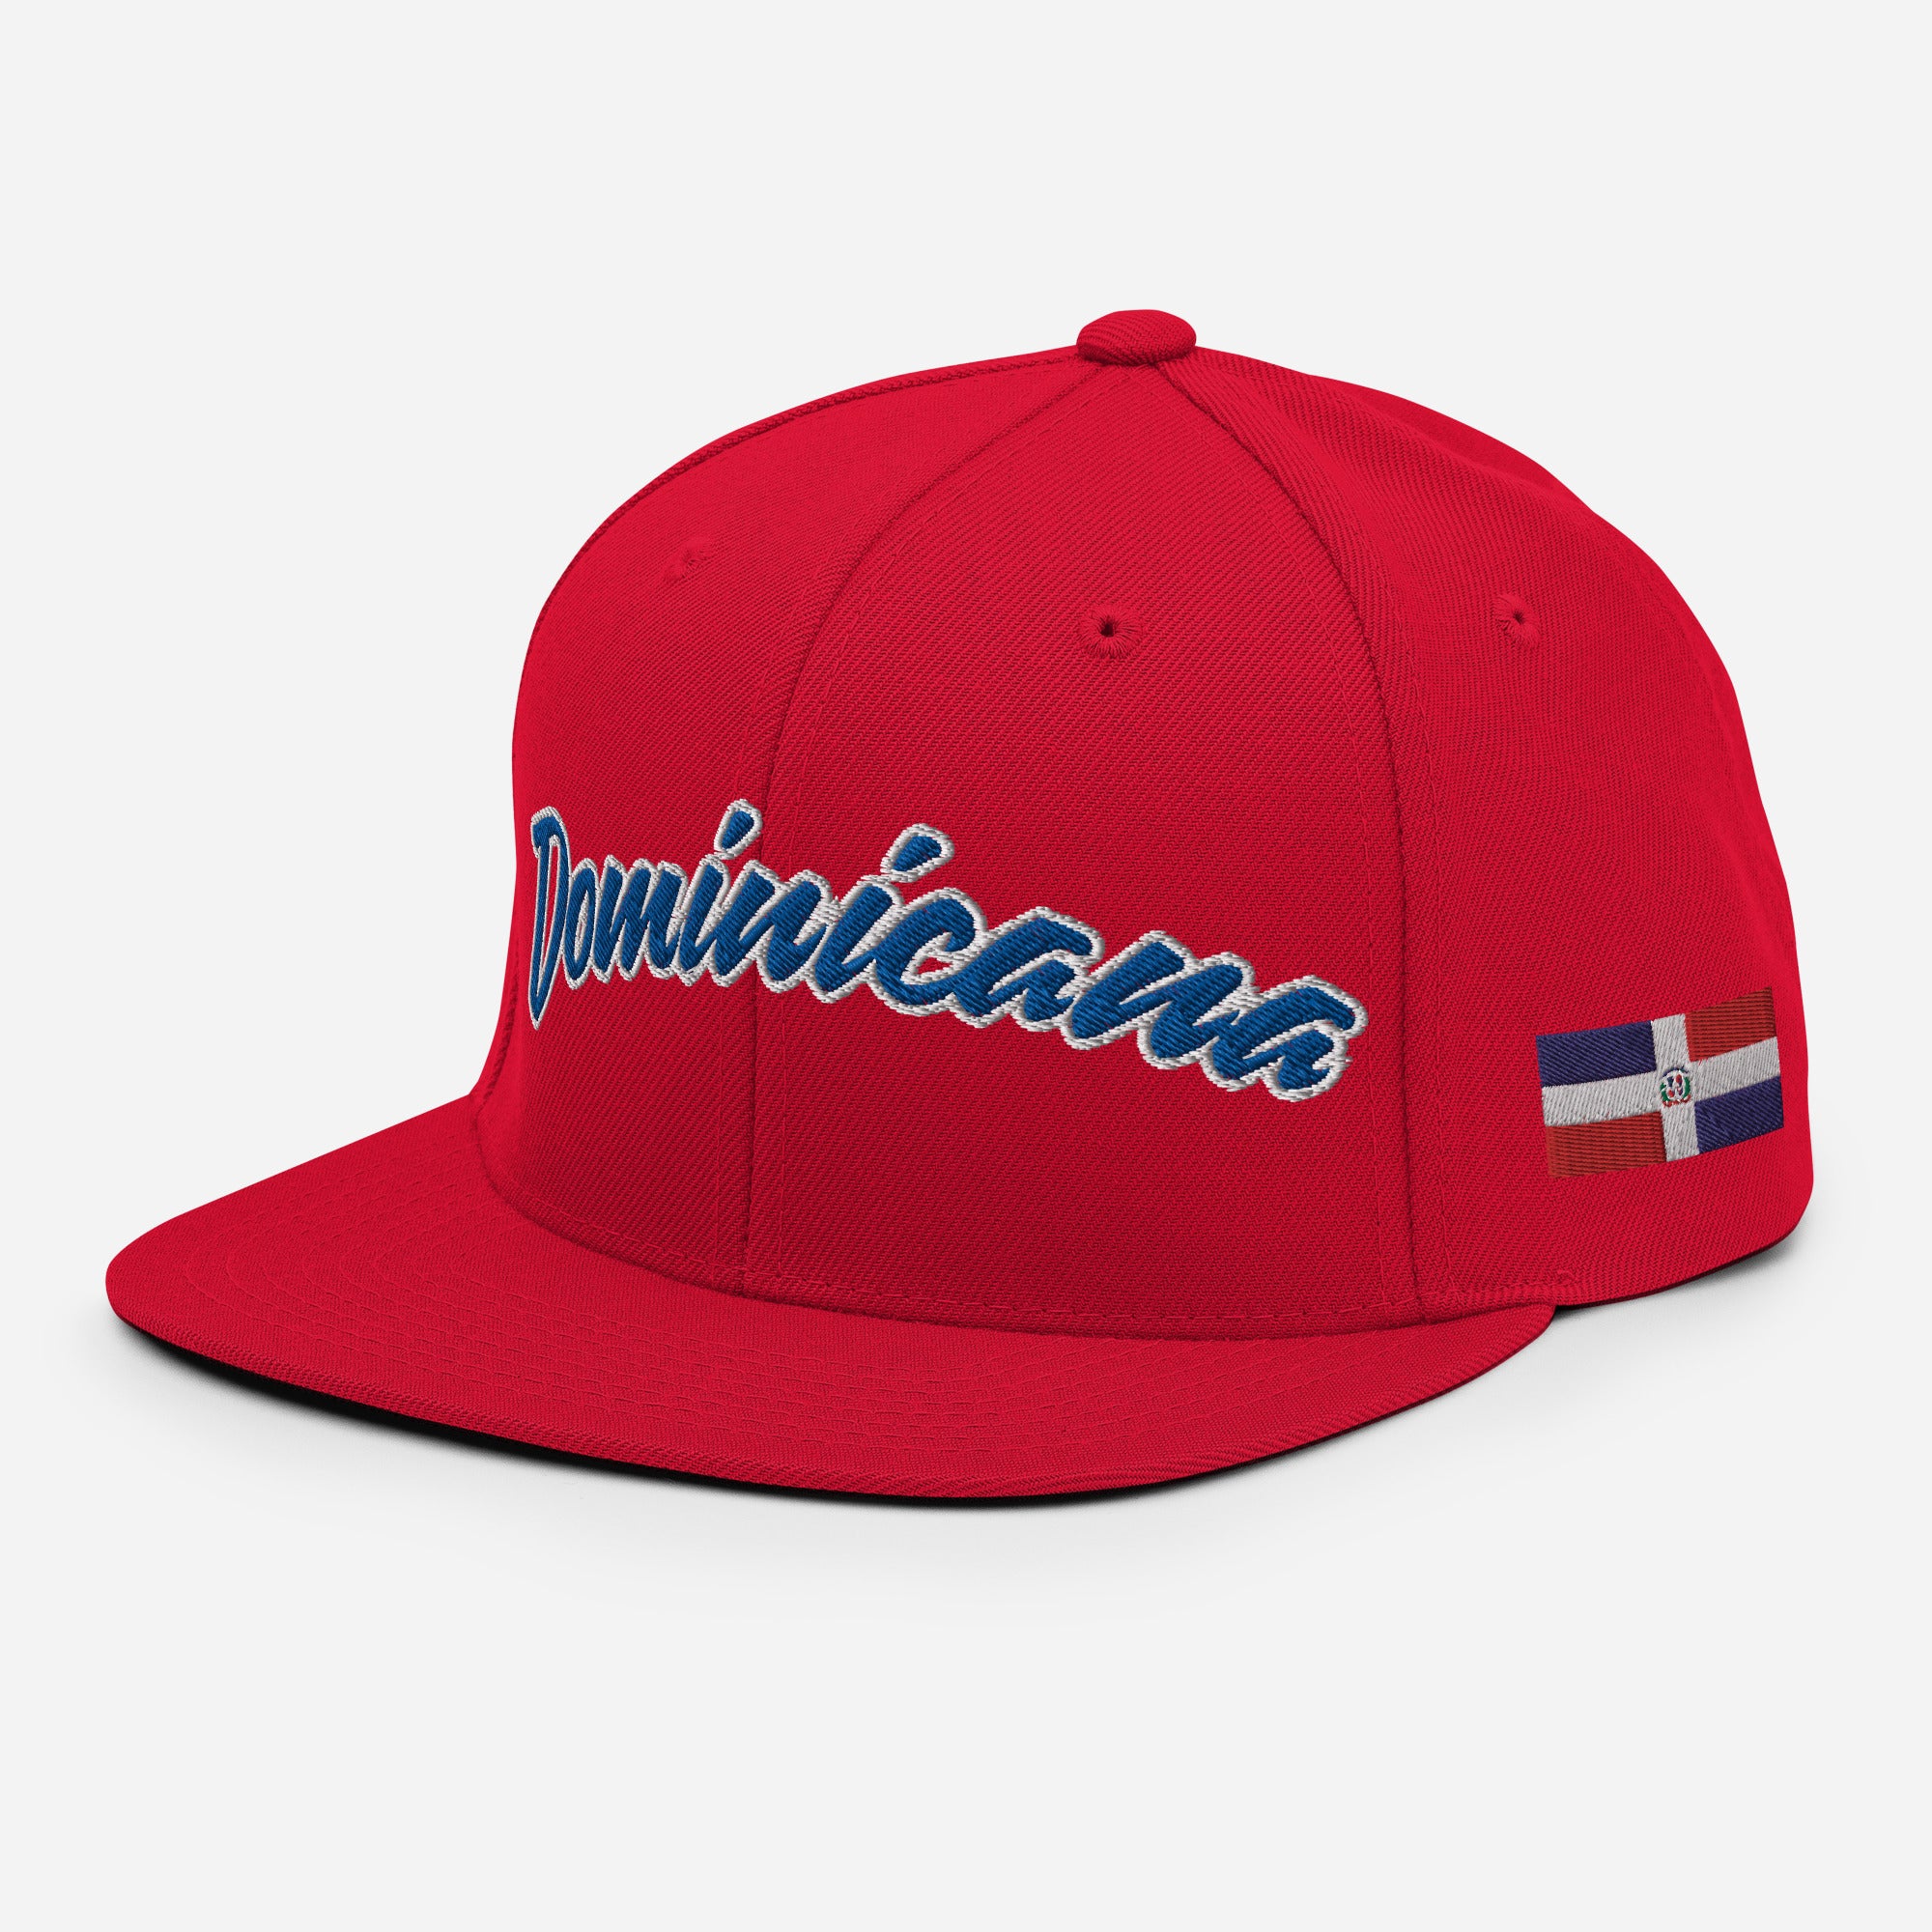 Republica Dominicana Baseball Snapback Hat